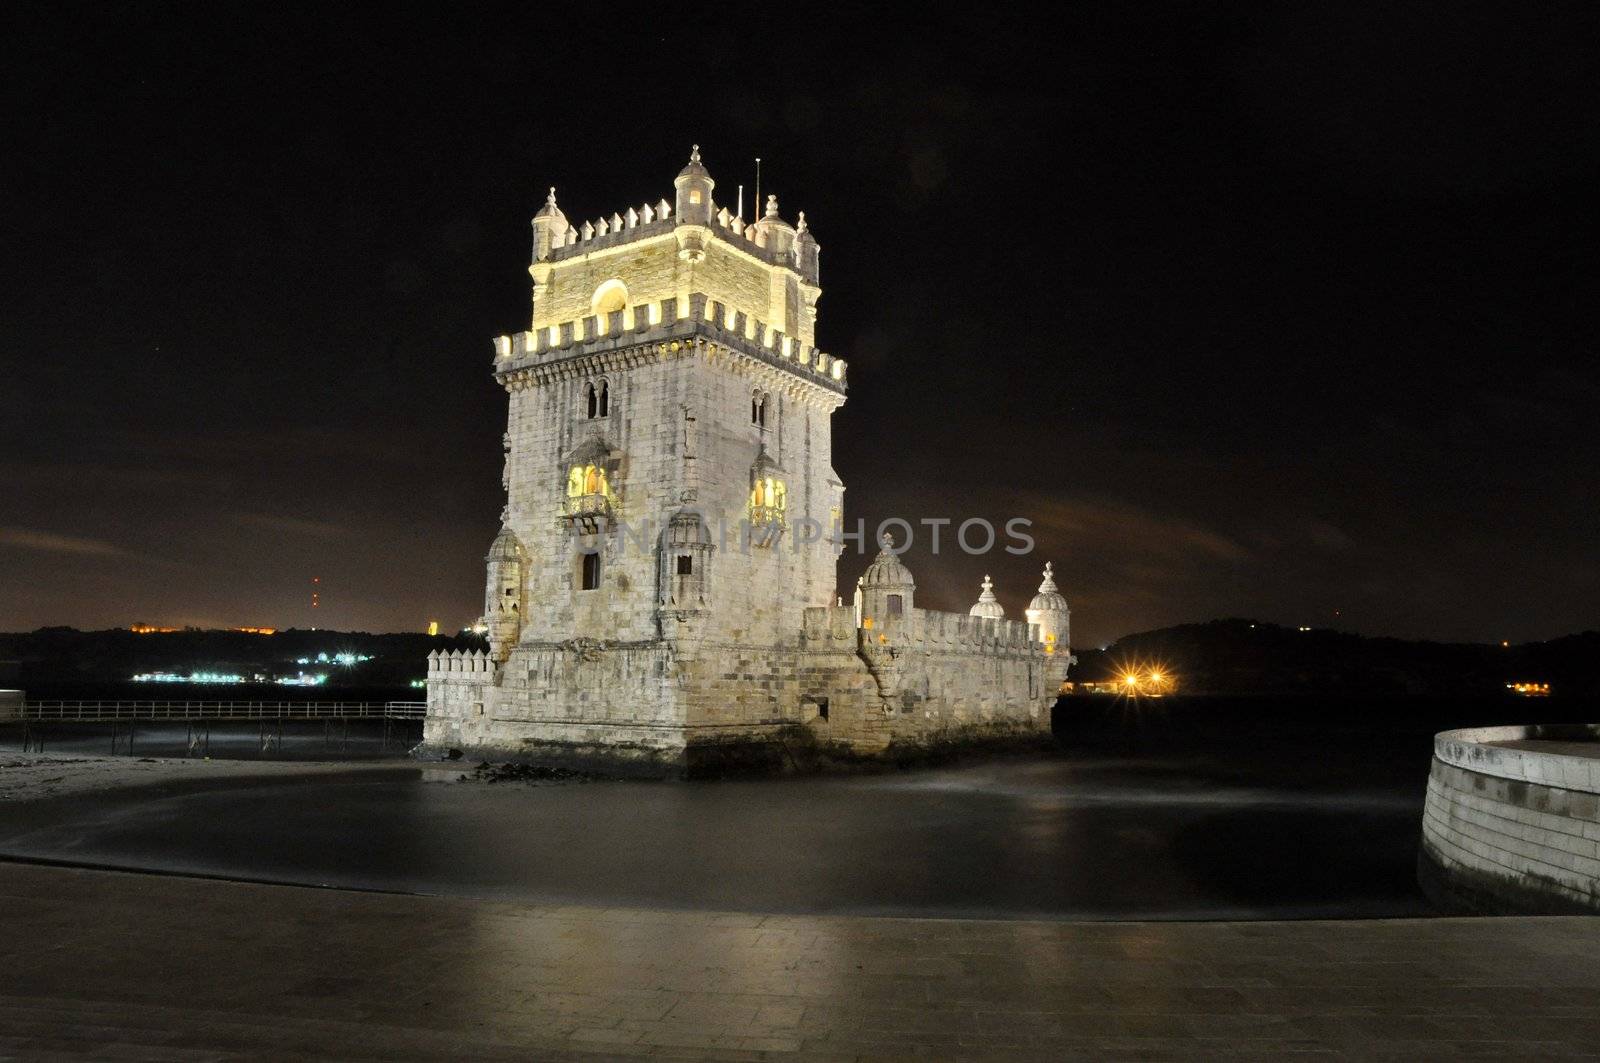 Torre de Belém (Belém tower) of Lisbon, Portugal by anderm